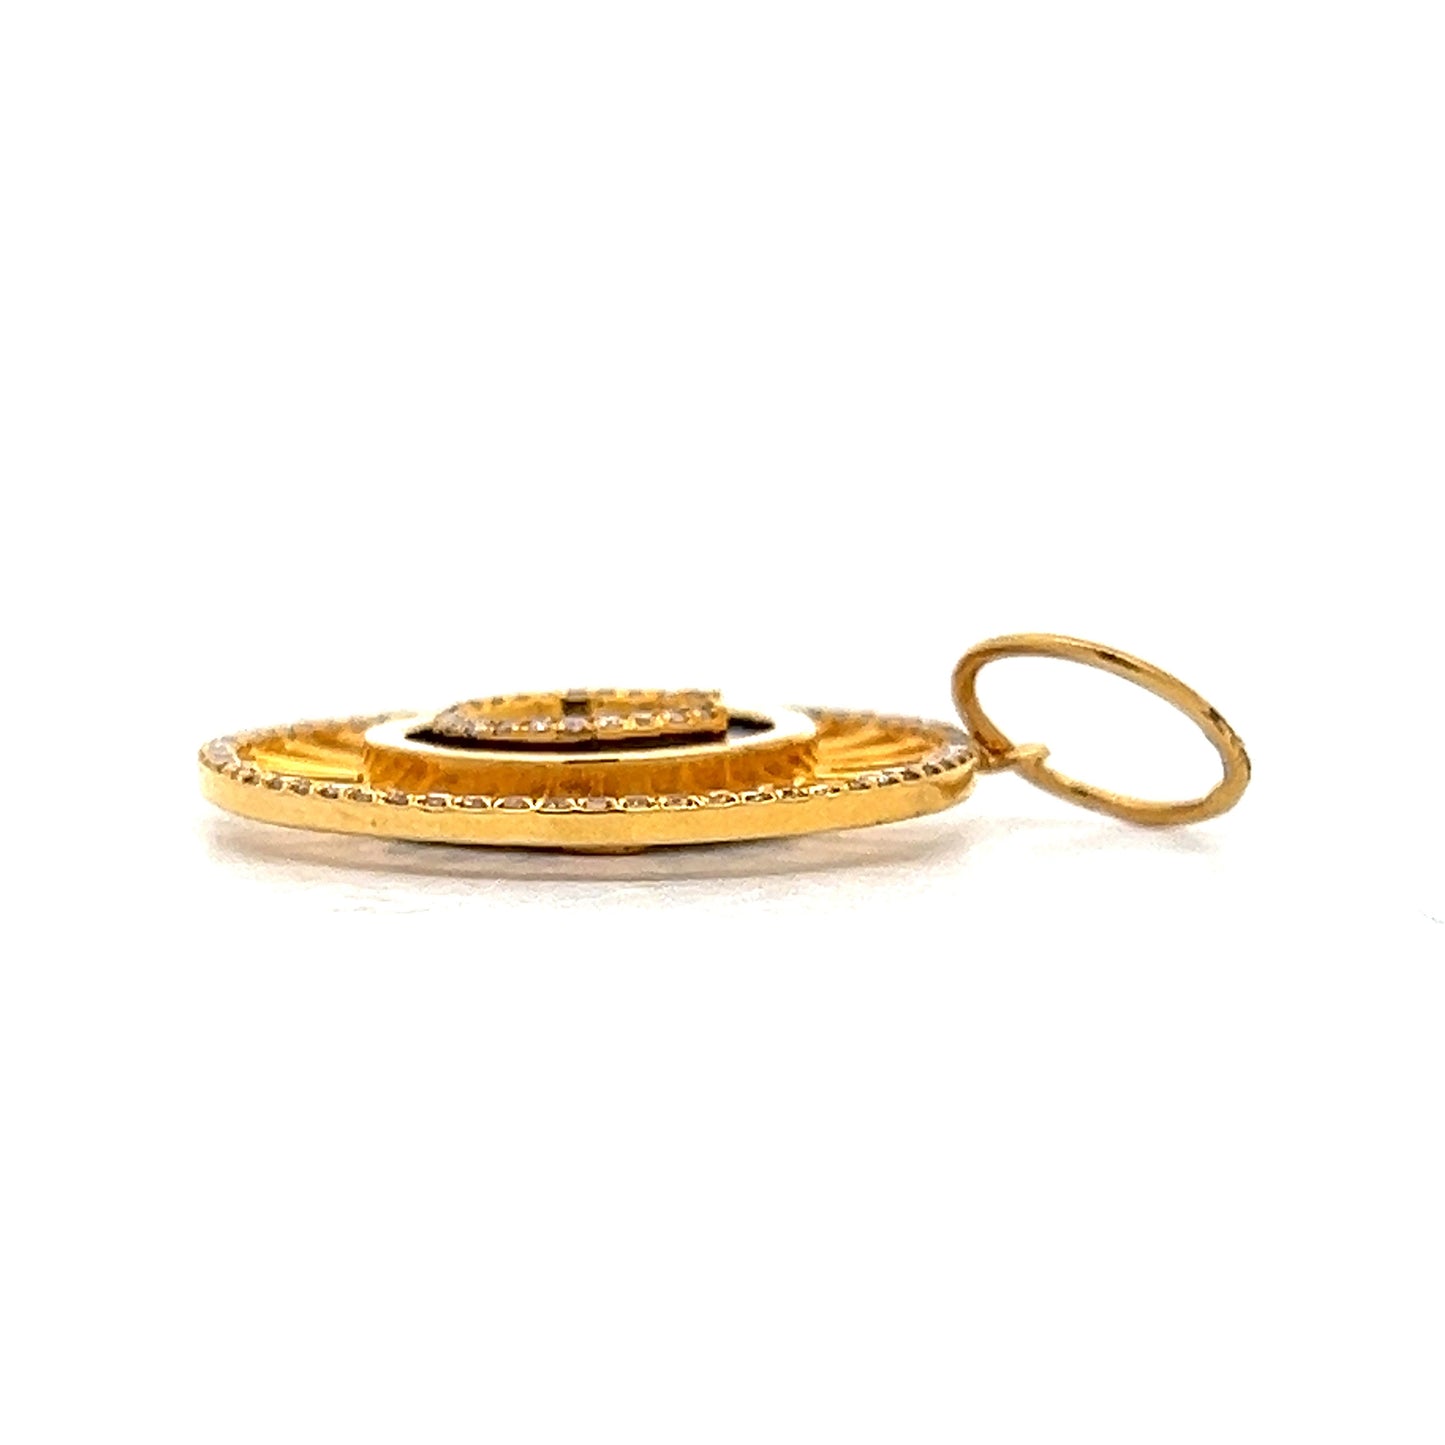 .42 Diamond Horseshoe Pendant Necklace in Yellow Gold